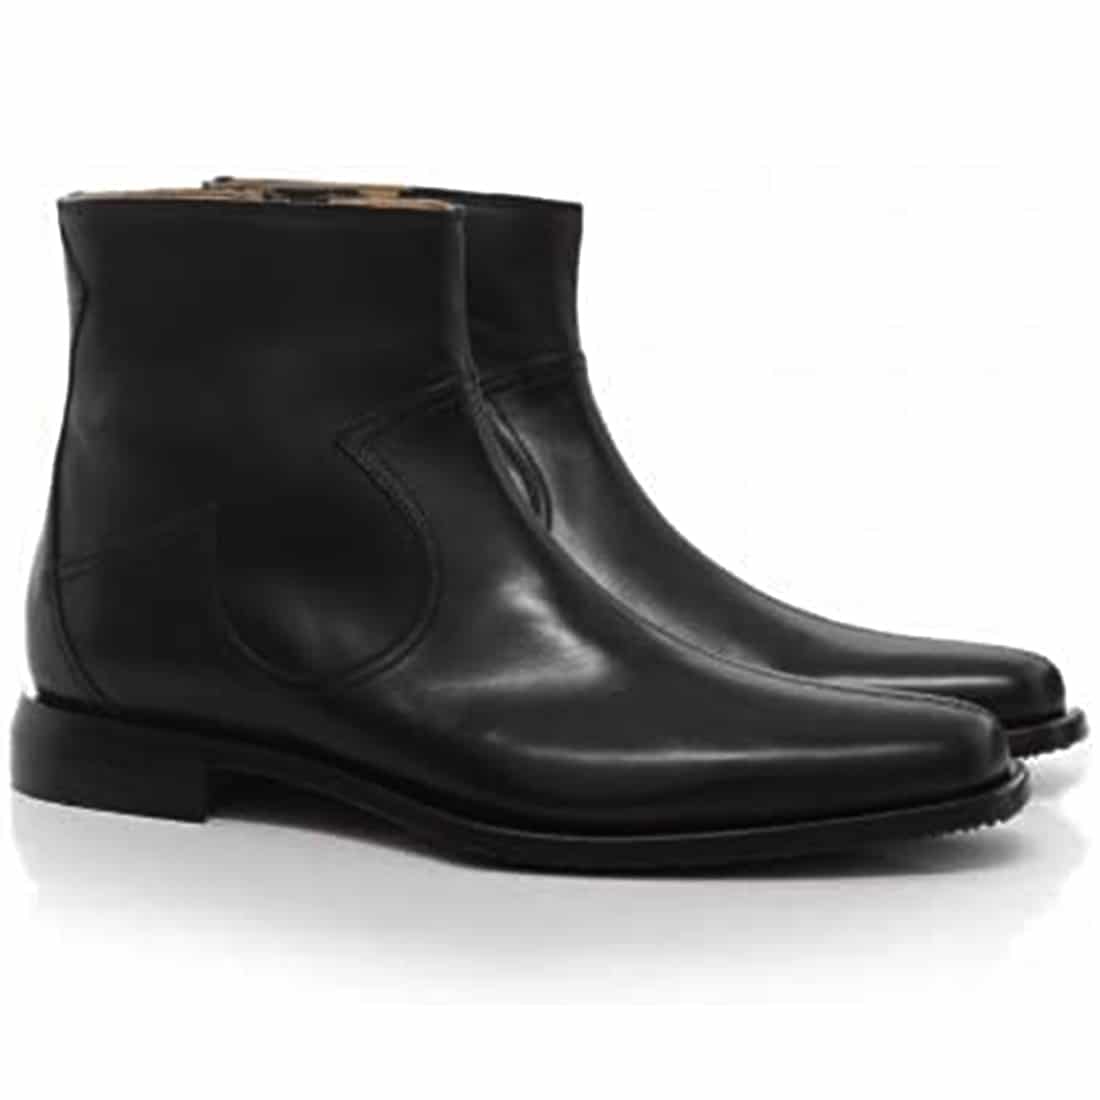 Oliver Black Chelsea Boots | Menswear Online